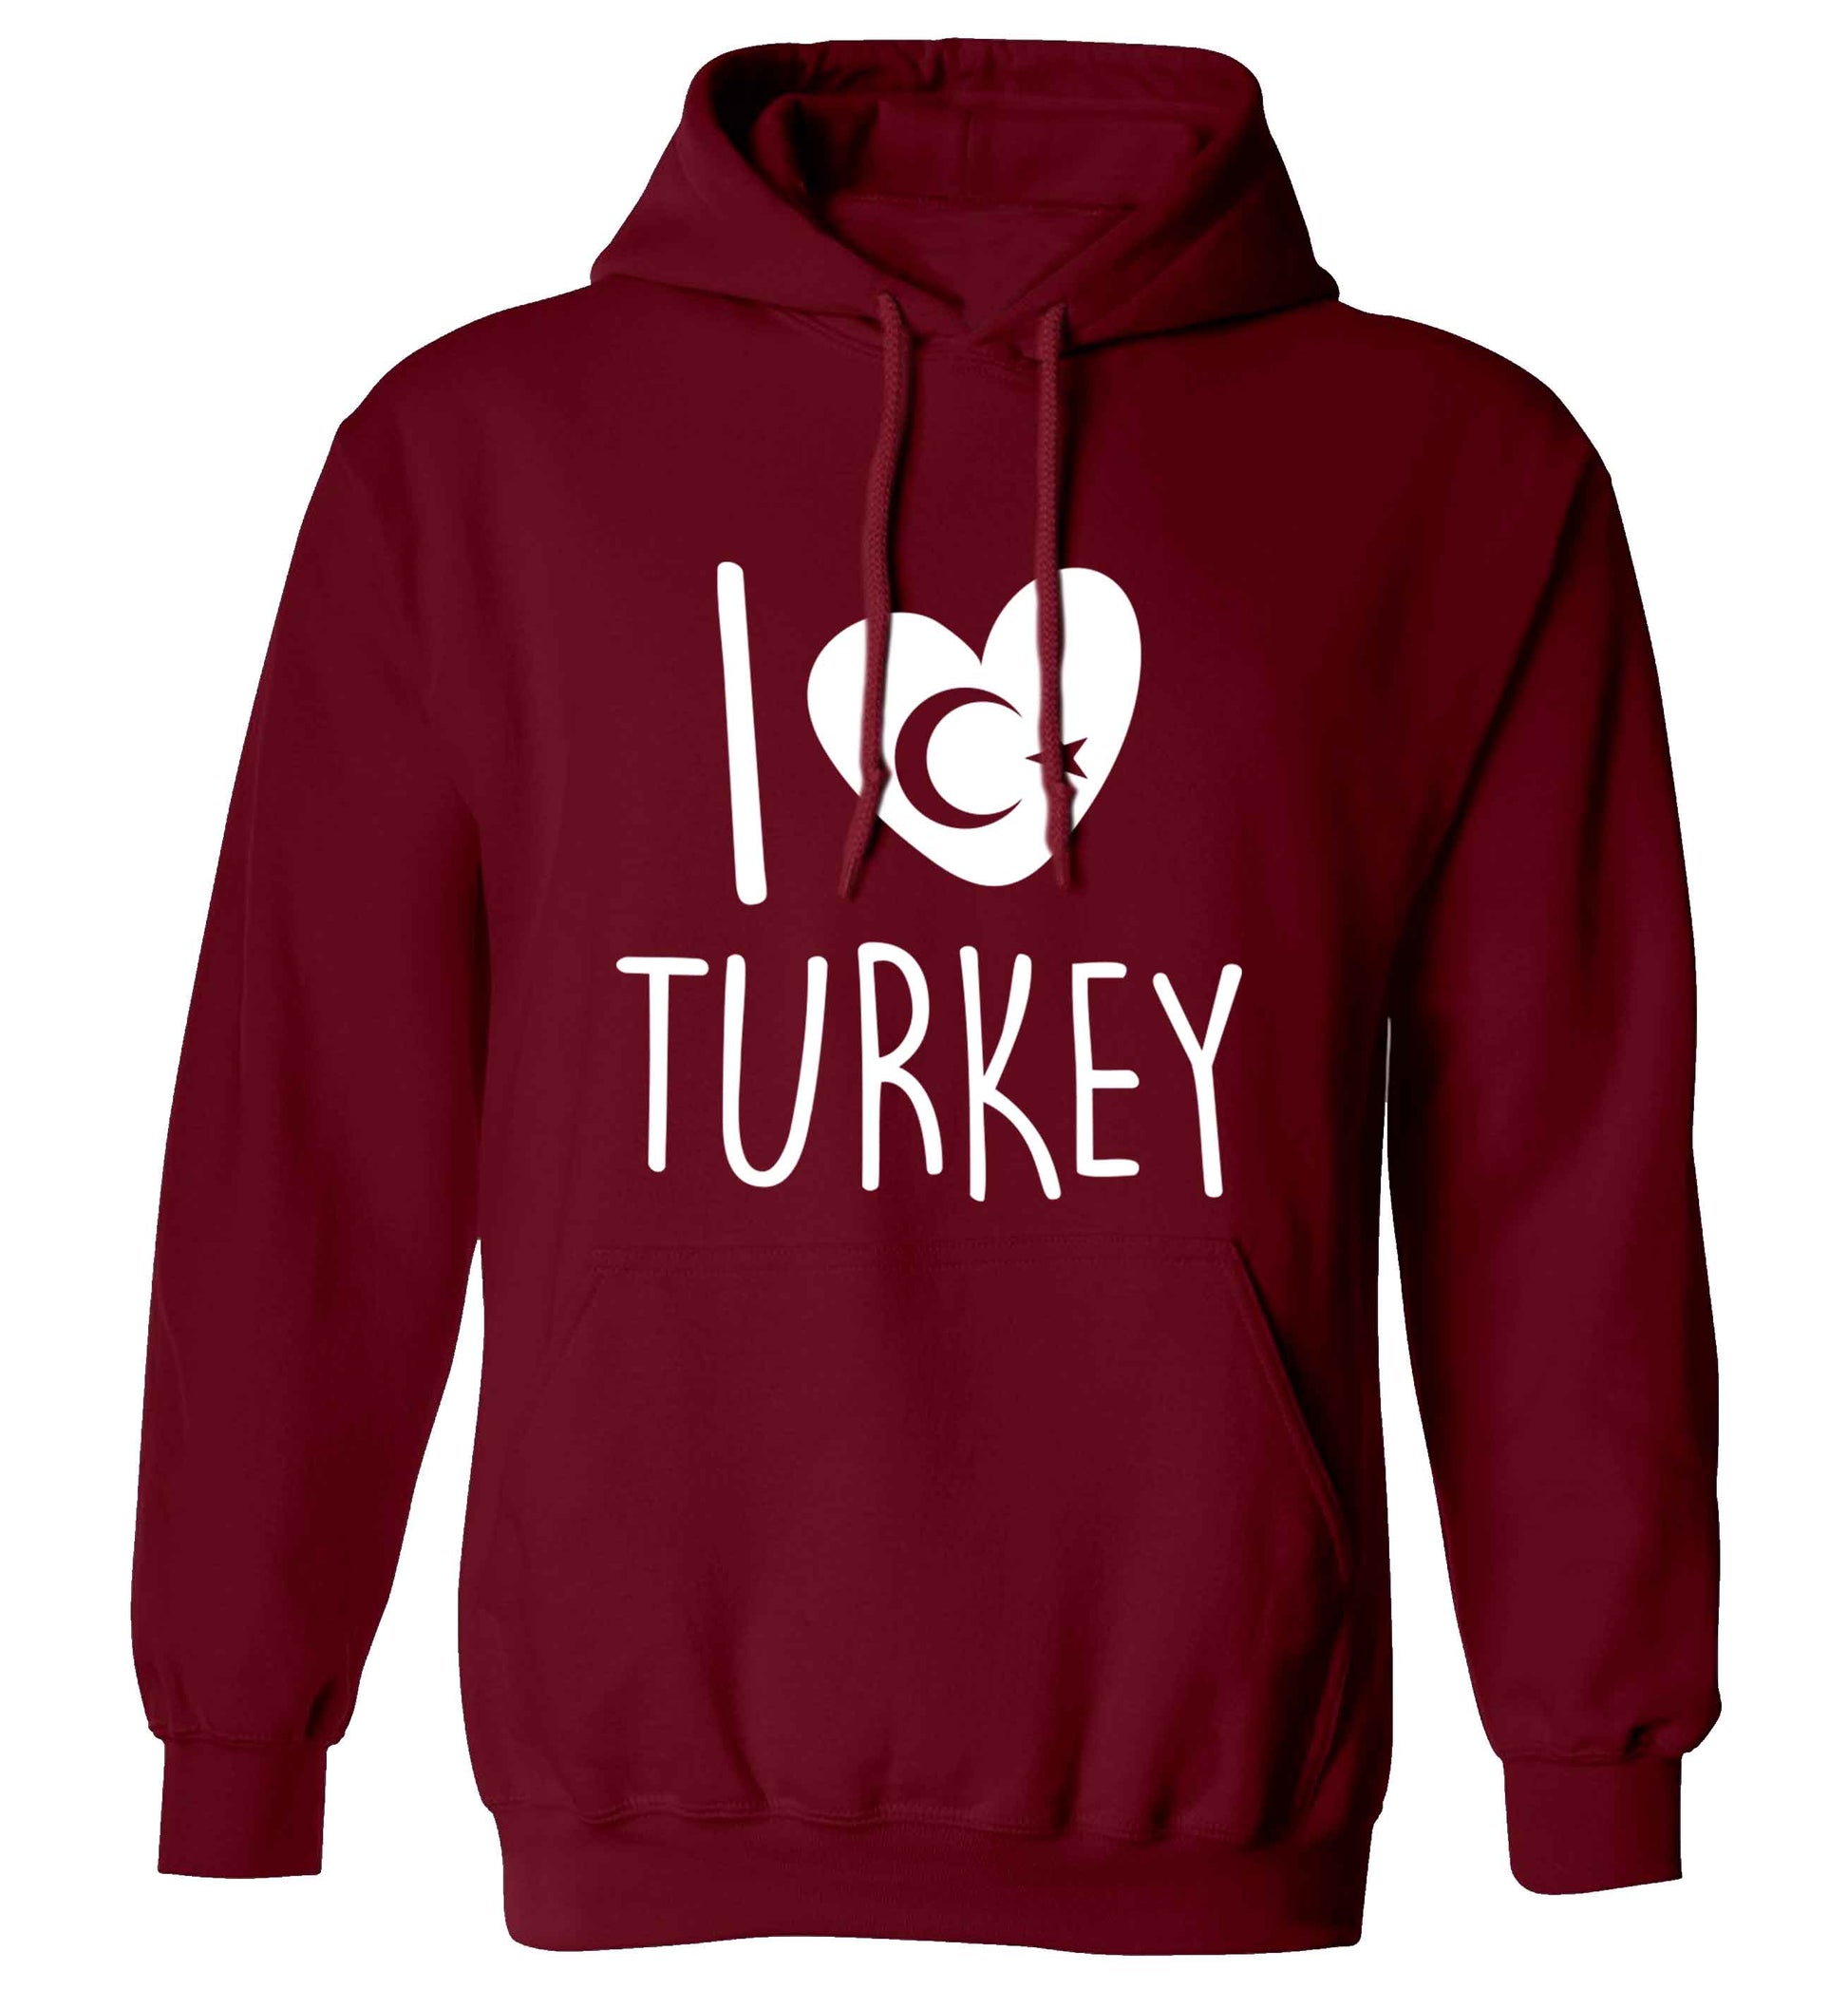 I love Turkey adults unisex maroon hoodie 2XL